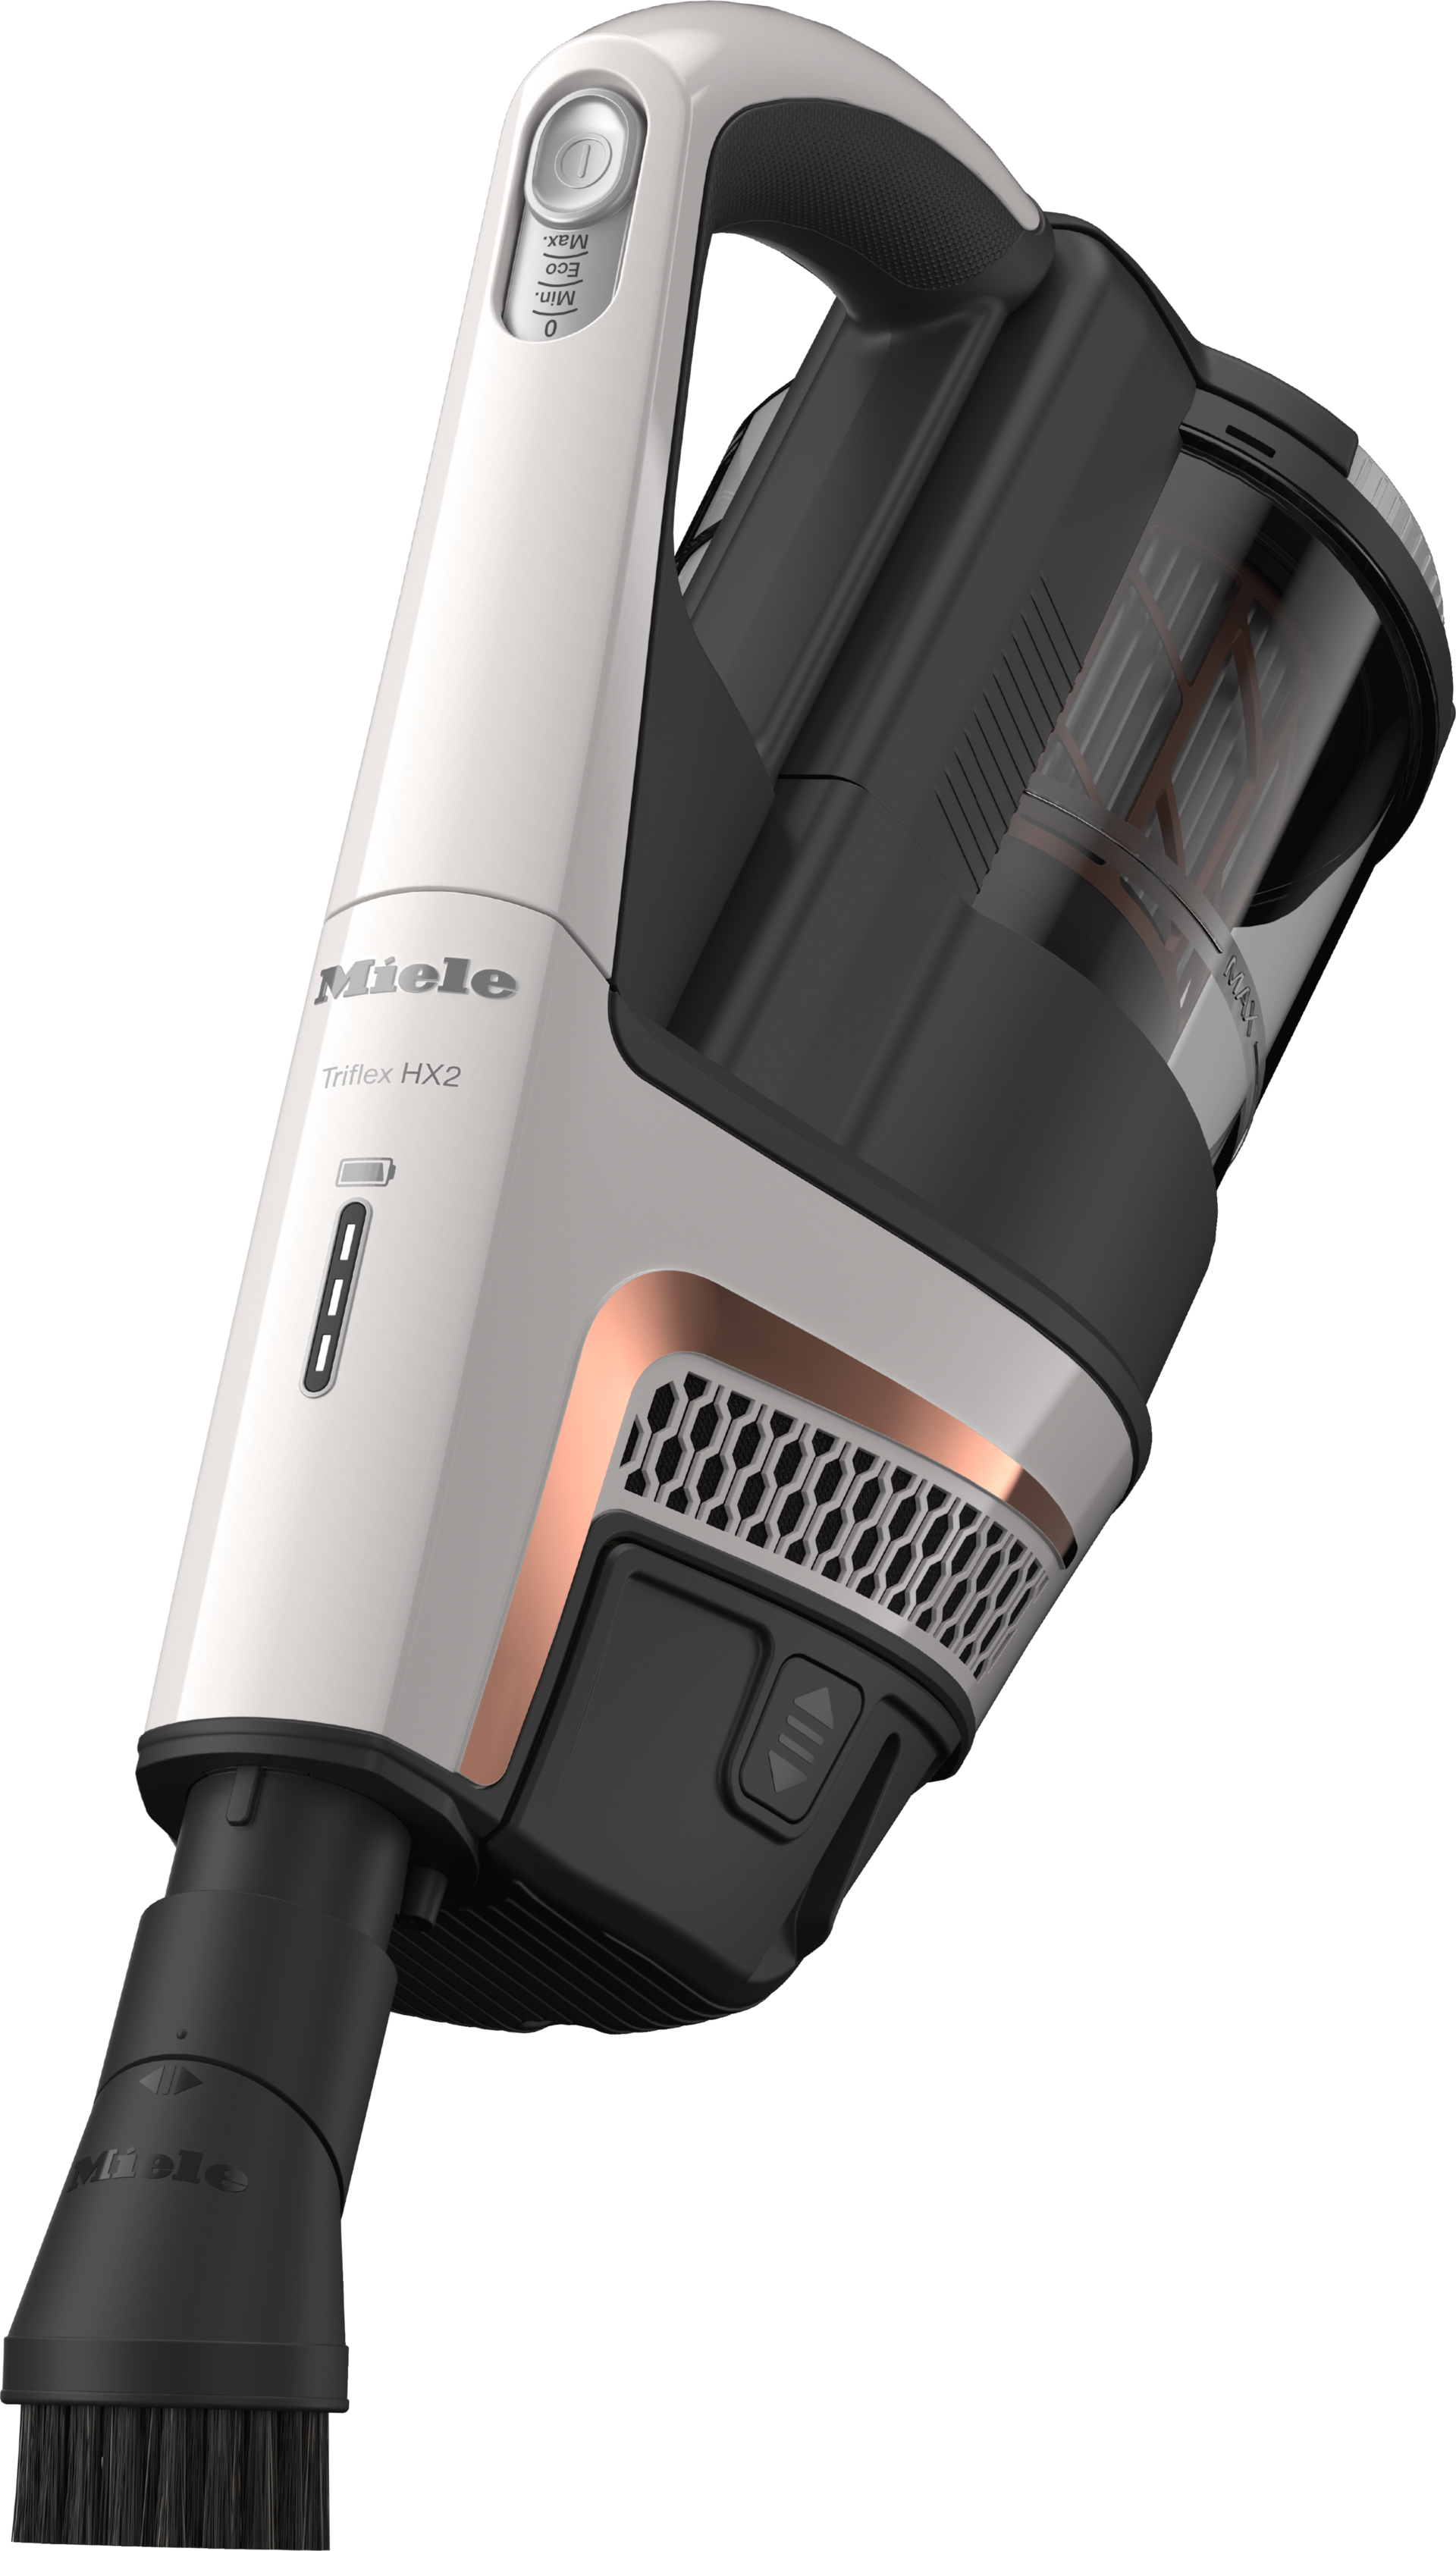 Vacuum cleaners - Triflex HX2 Lotus white - 7